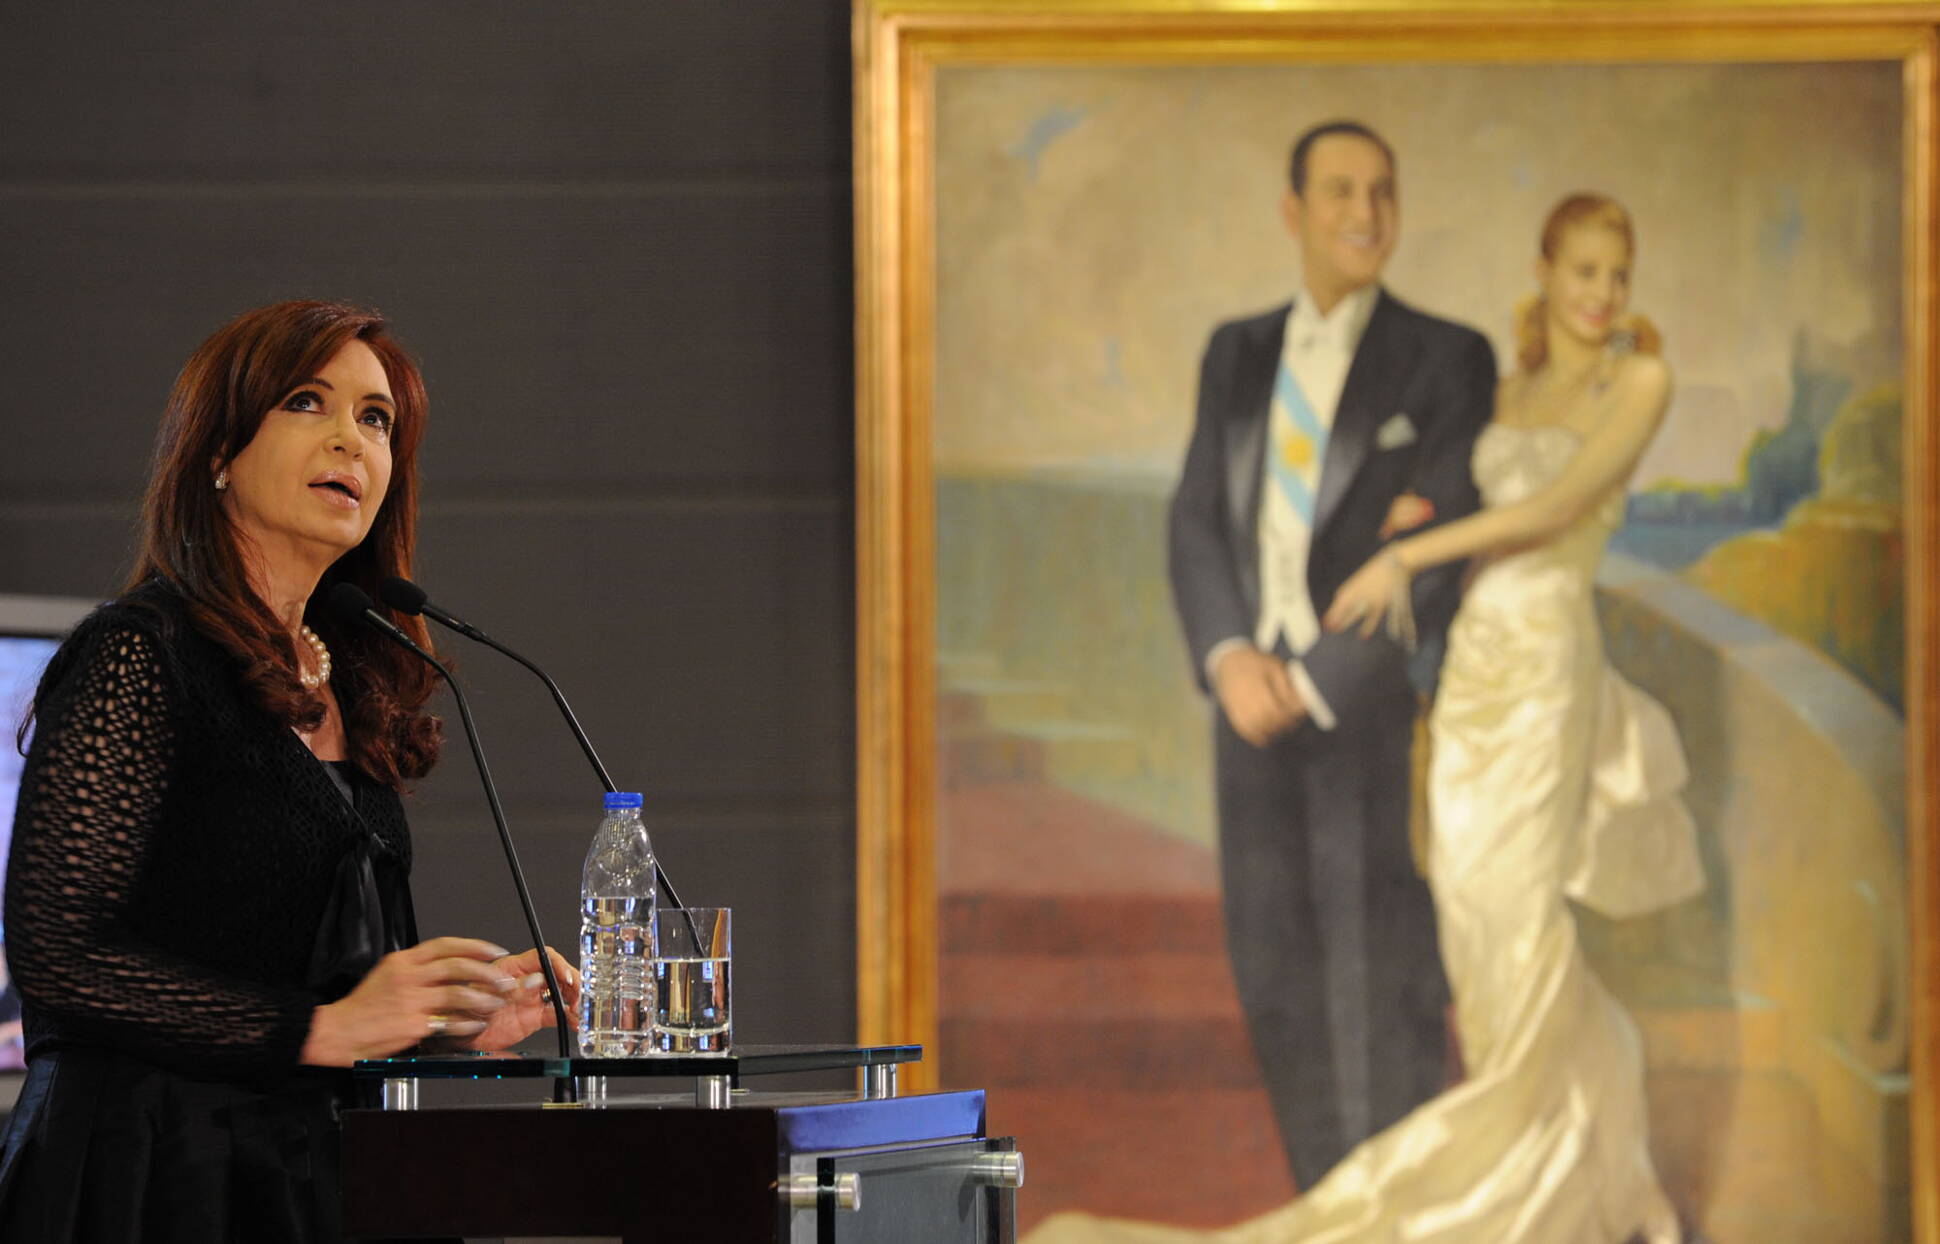 “Porque tenemos historia, podemos construir el futuro”, aseguró Cristina Fernández